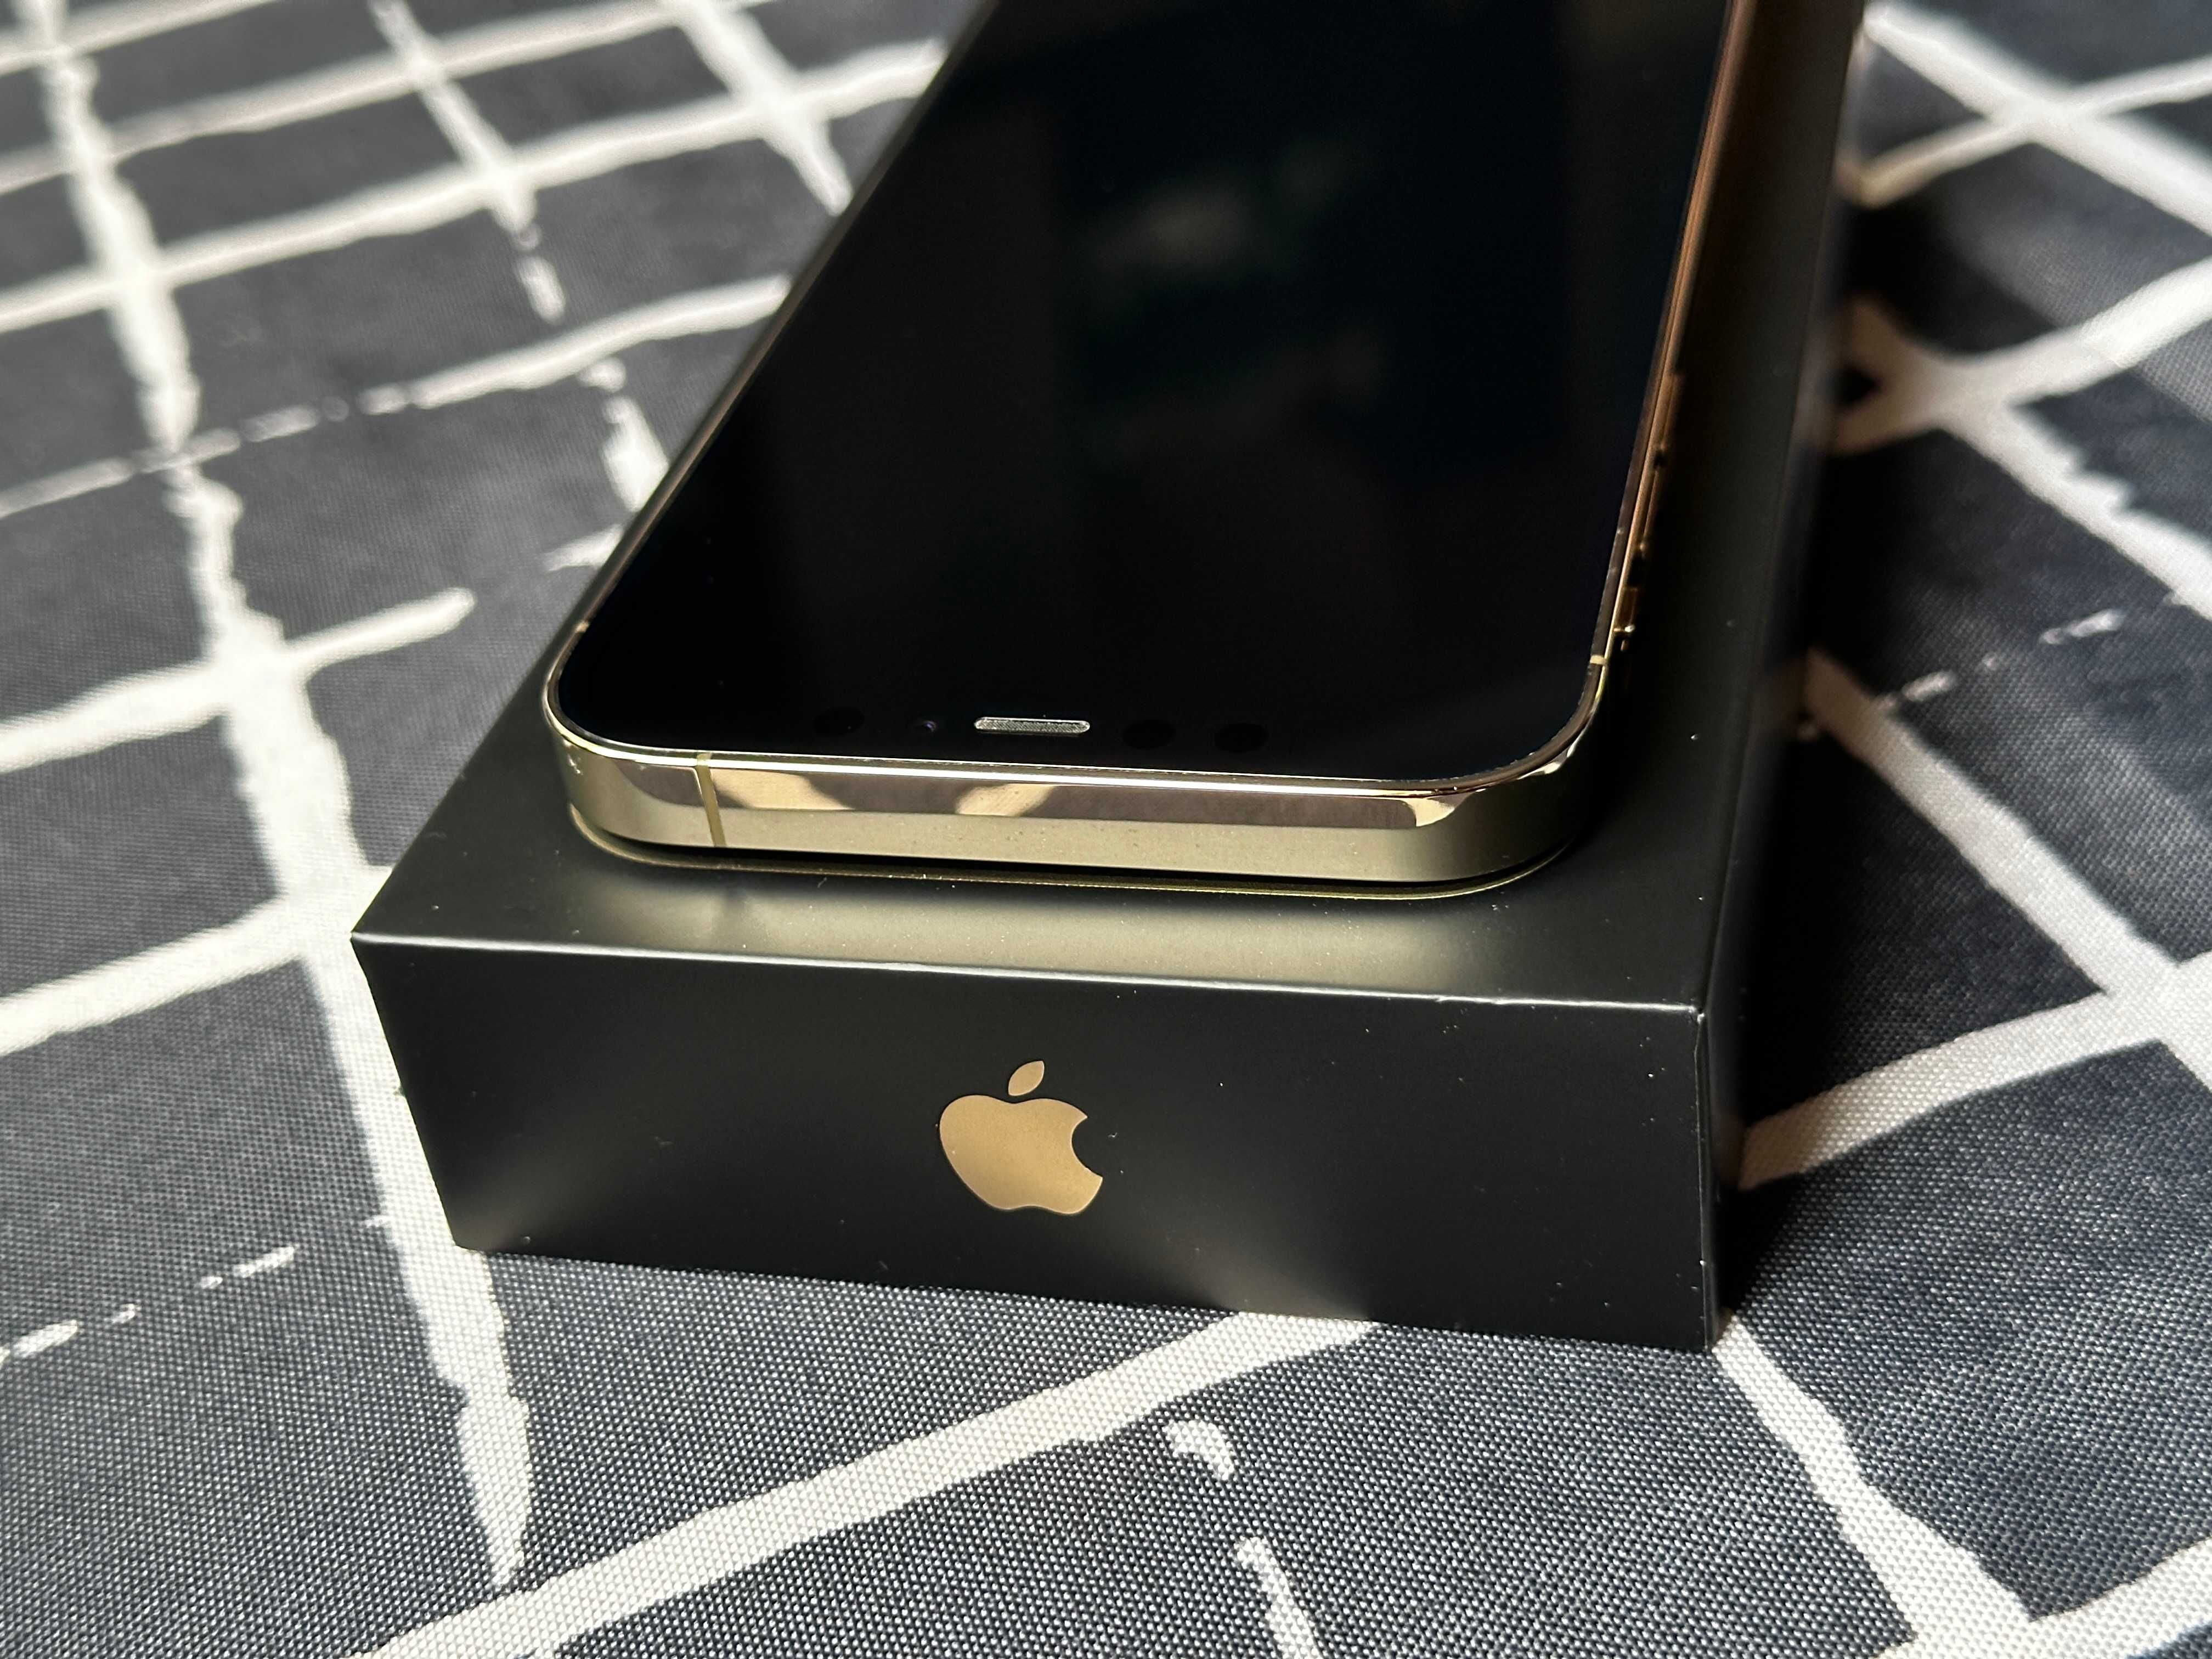 iPhone 12 Pro 128GB Gold